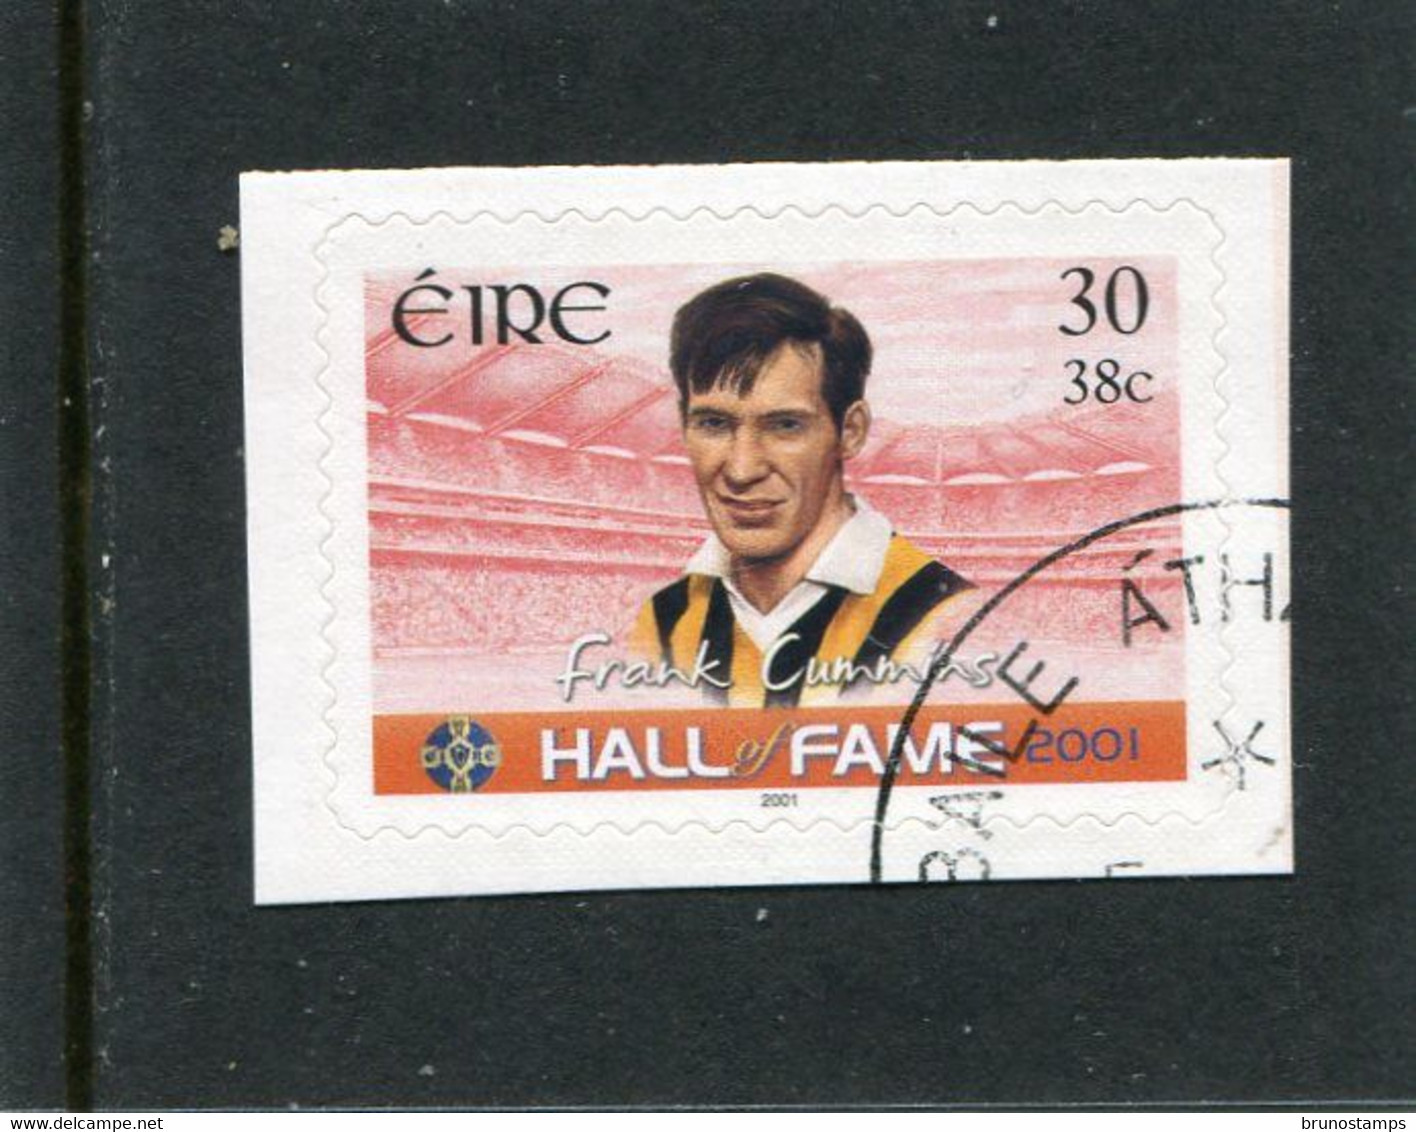 IRELAND/EIRE - 2001  30p  FRANK CUMMINGS  SELF ADHESIVE  FINE USED - Used Stamps